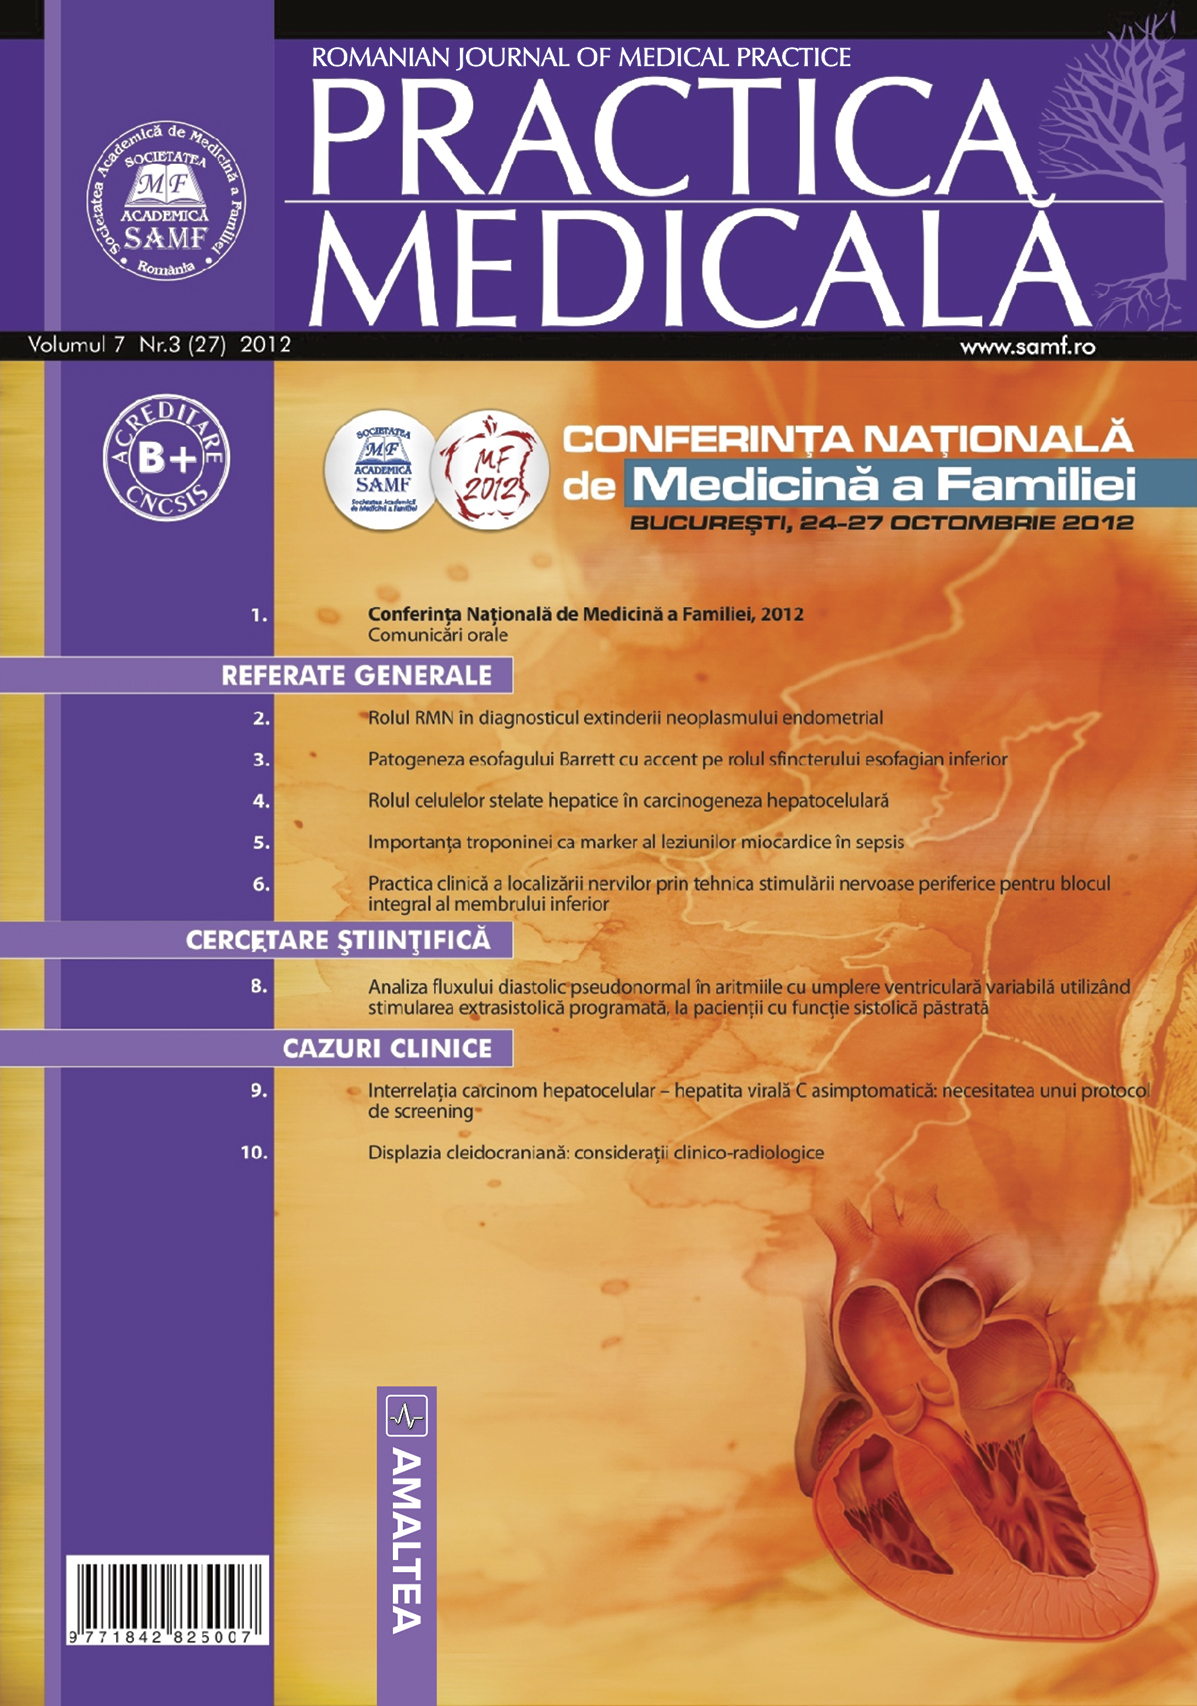 Romanian Journal of Medical Practice | Practica Medicala, Vol. VII, No. 3 (27), 2012